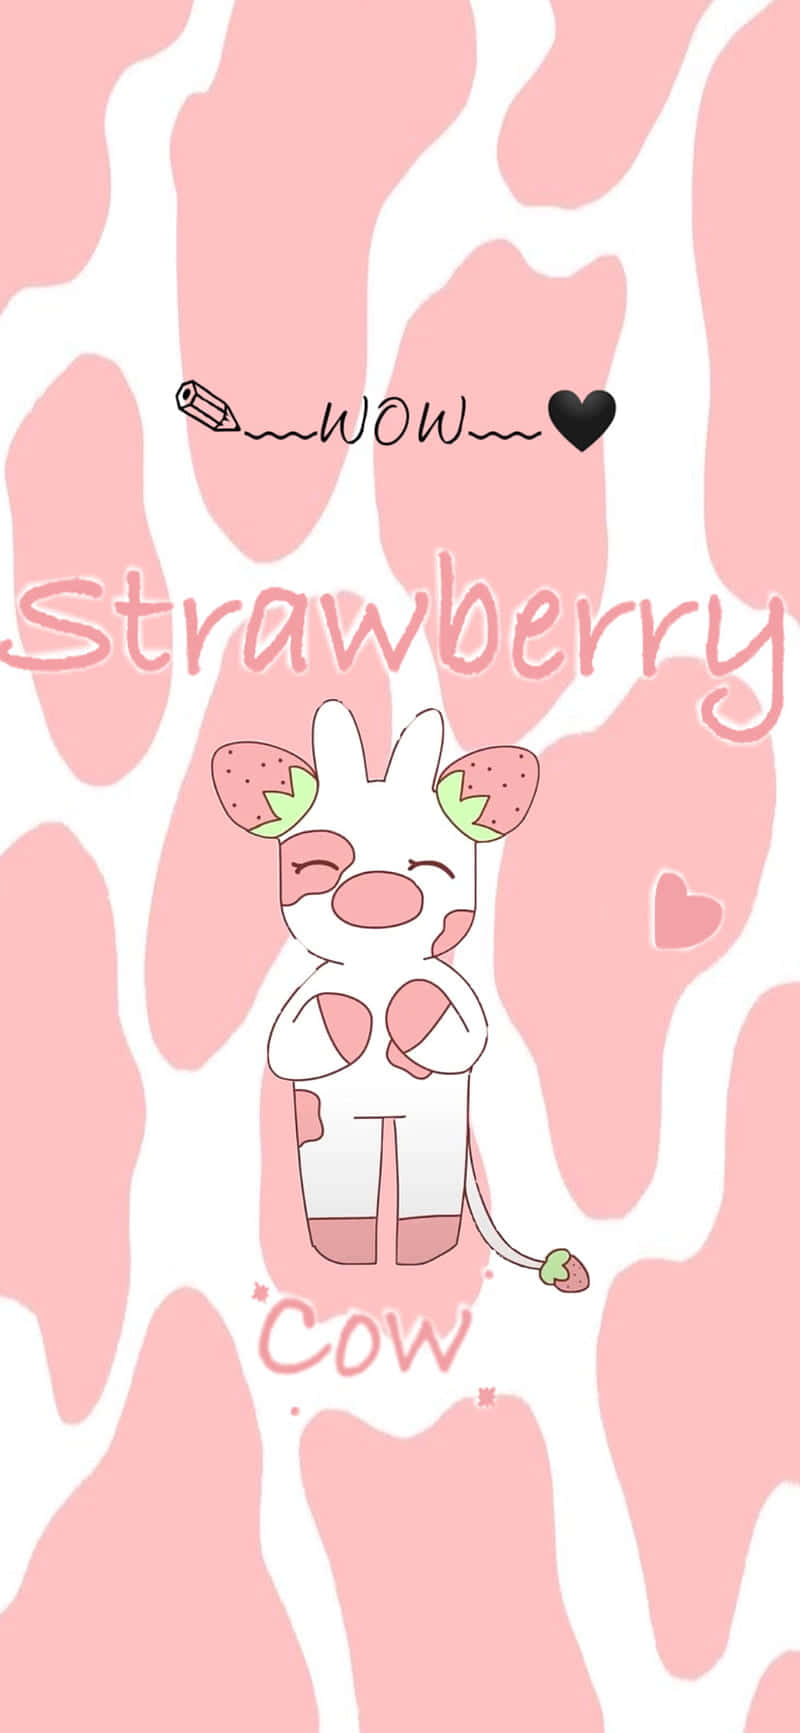 Cute Strawberry Cow in a Blissful Meadow